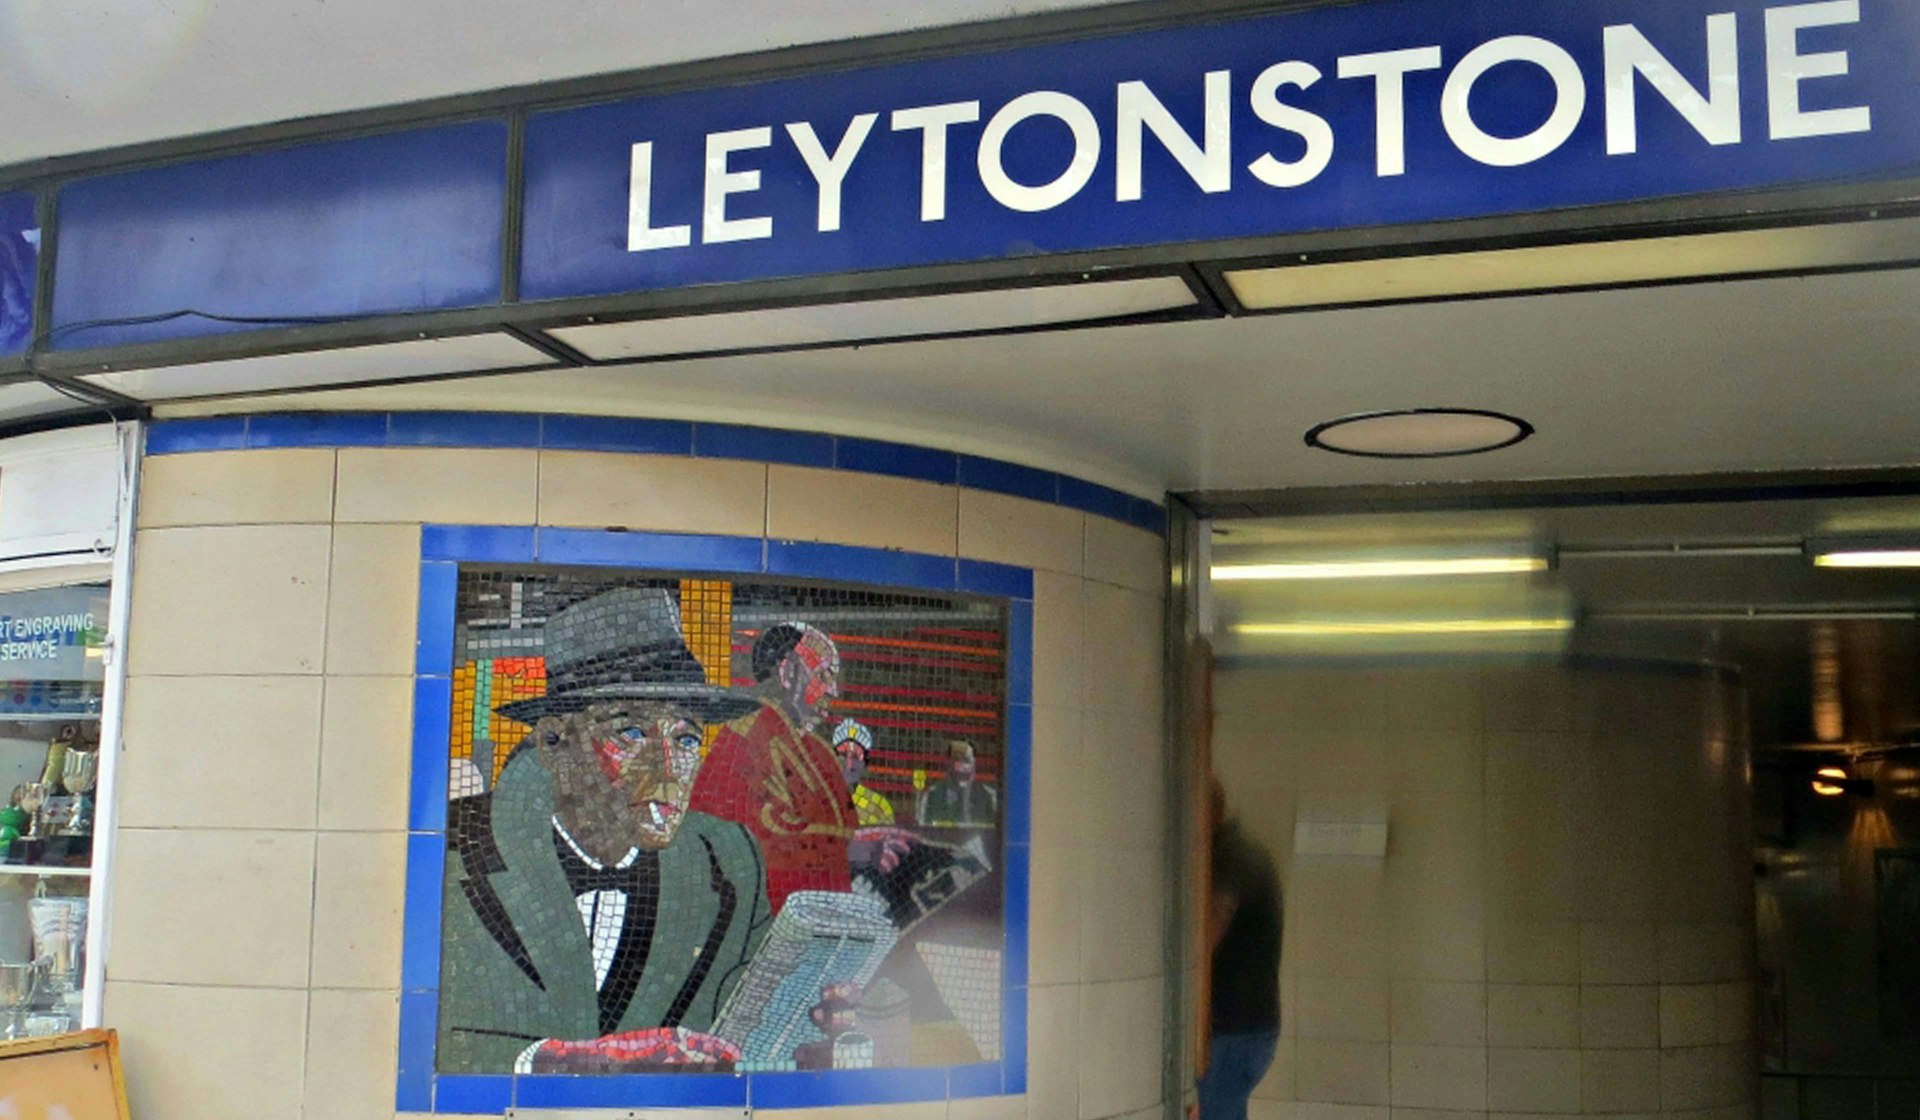 A positive lens on Leytonstone